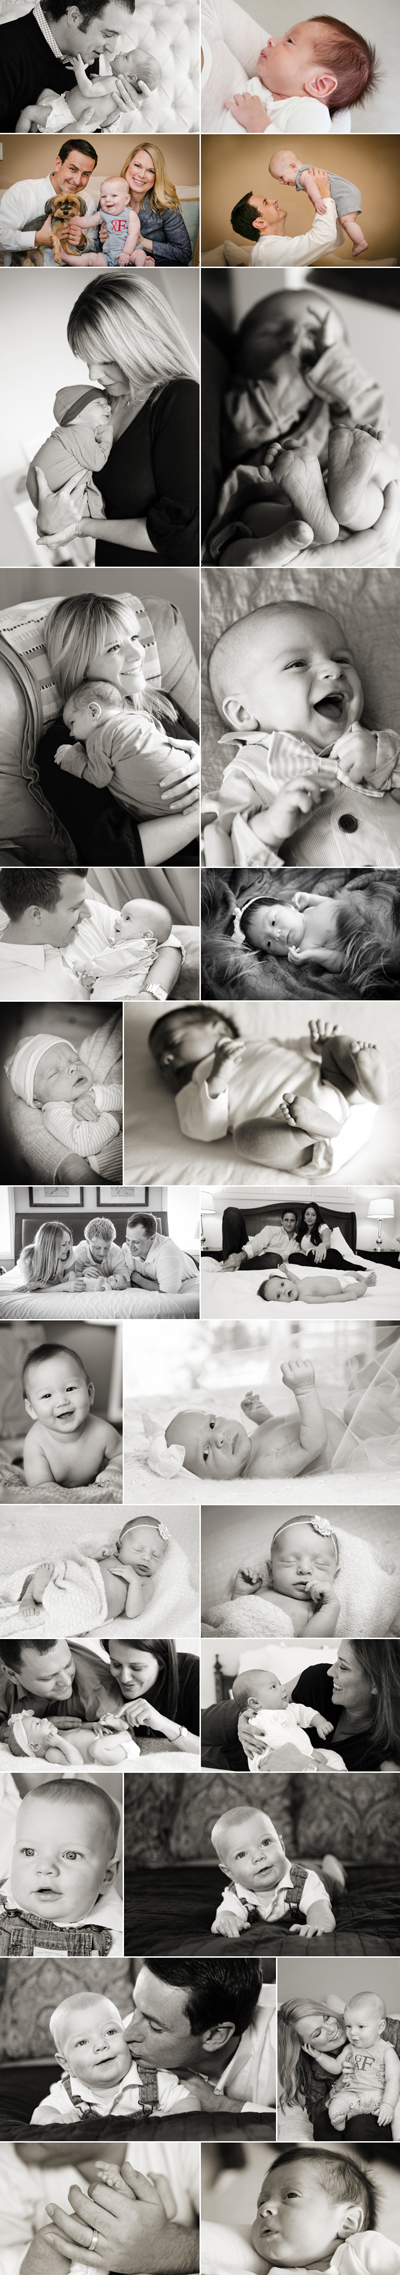 Newborn baby photos